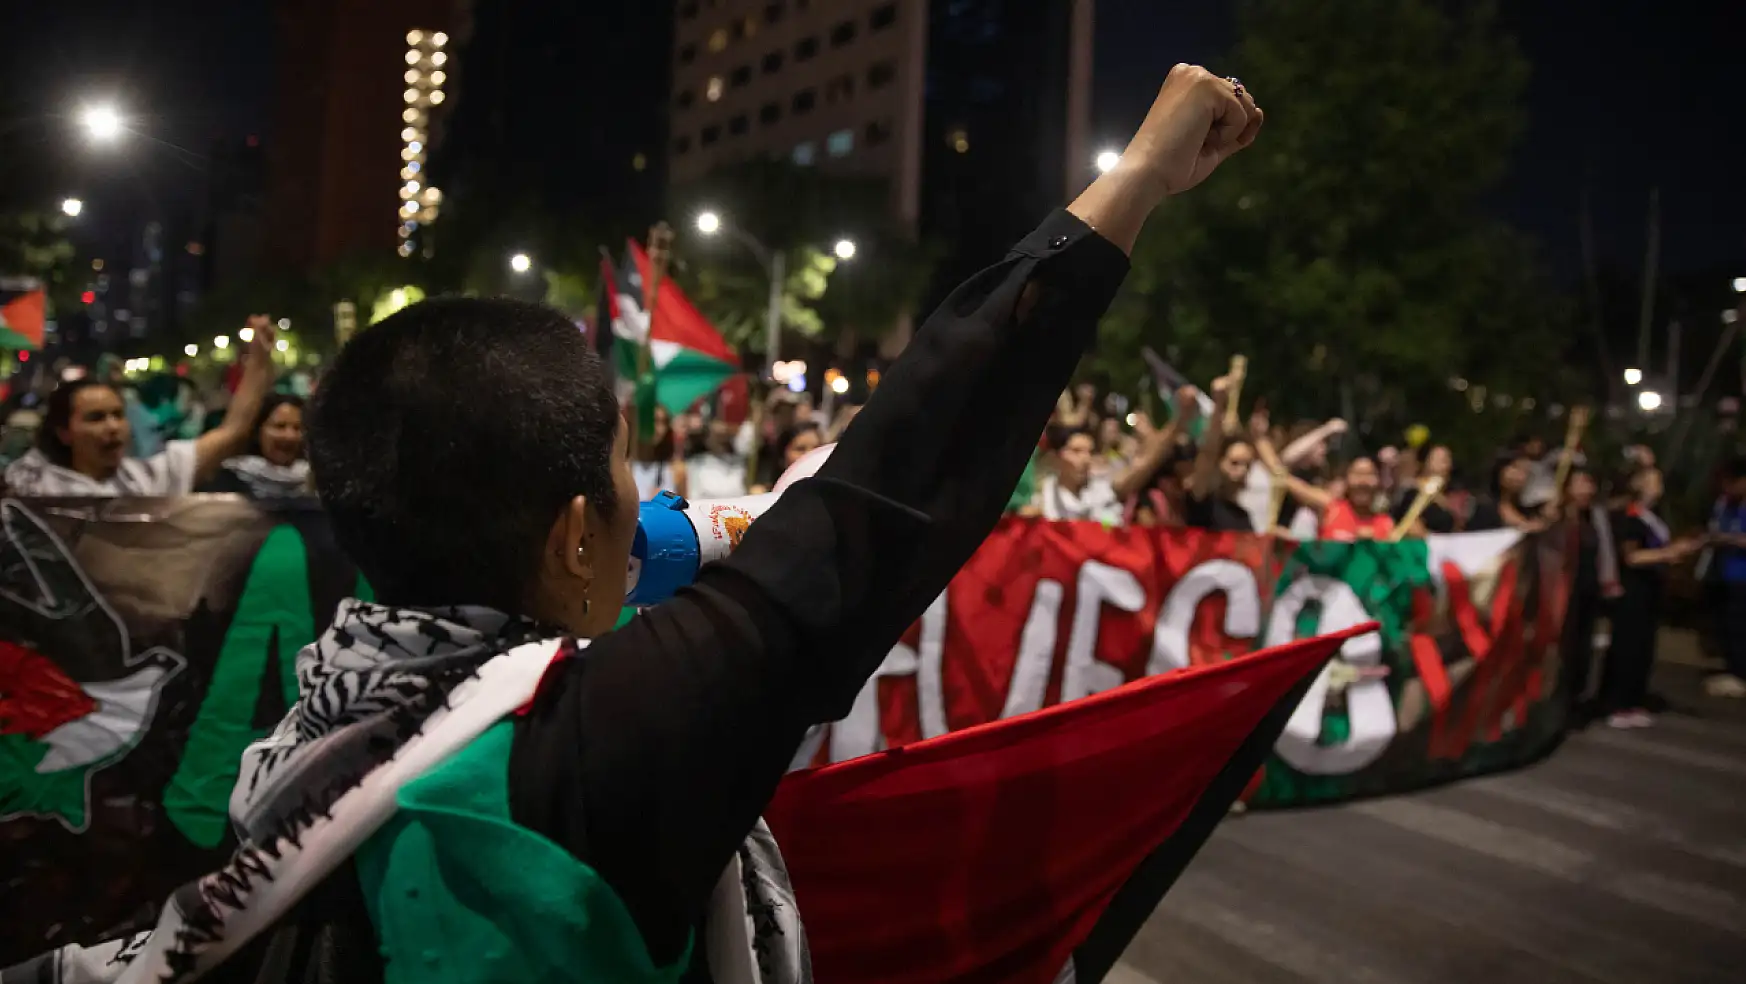 Mexico City'de Filistin'e destek gösterisi düzenlendi